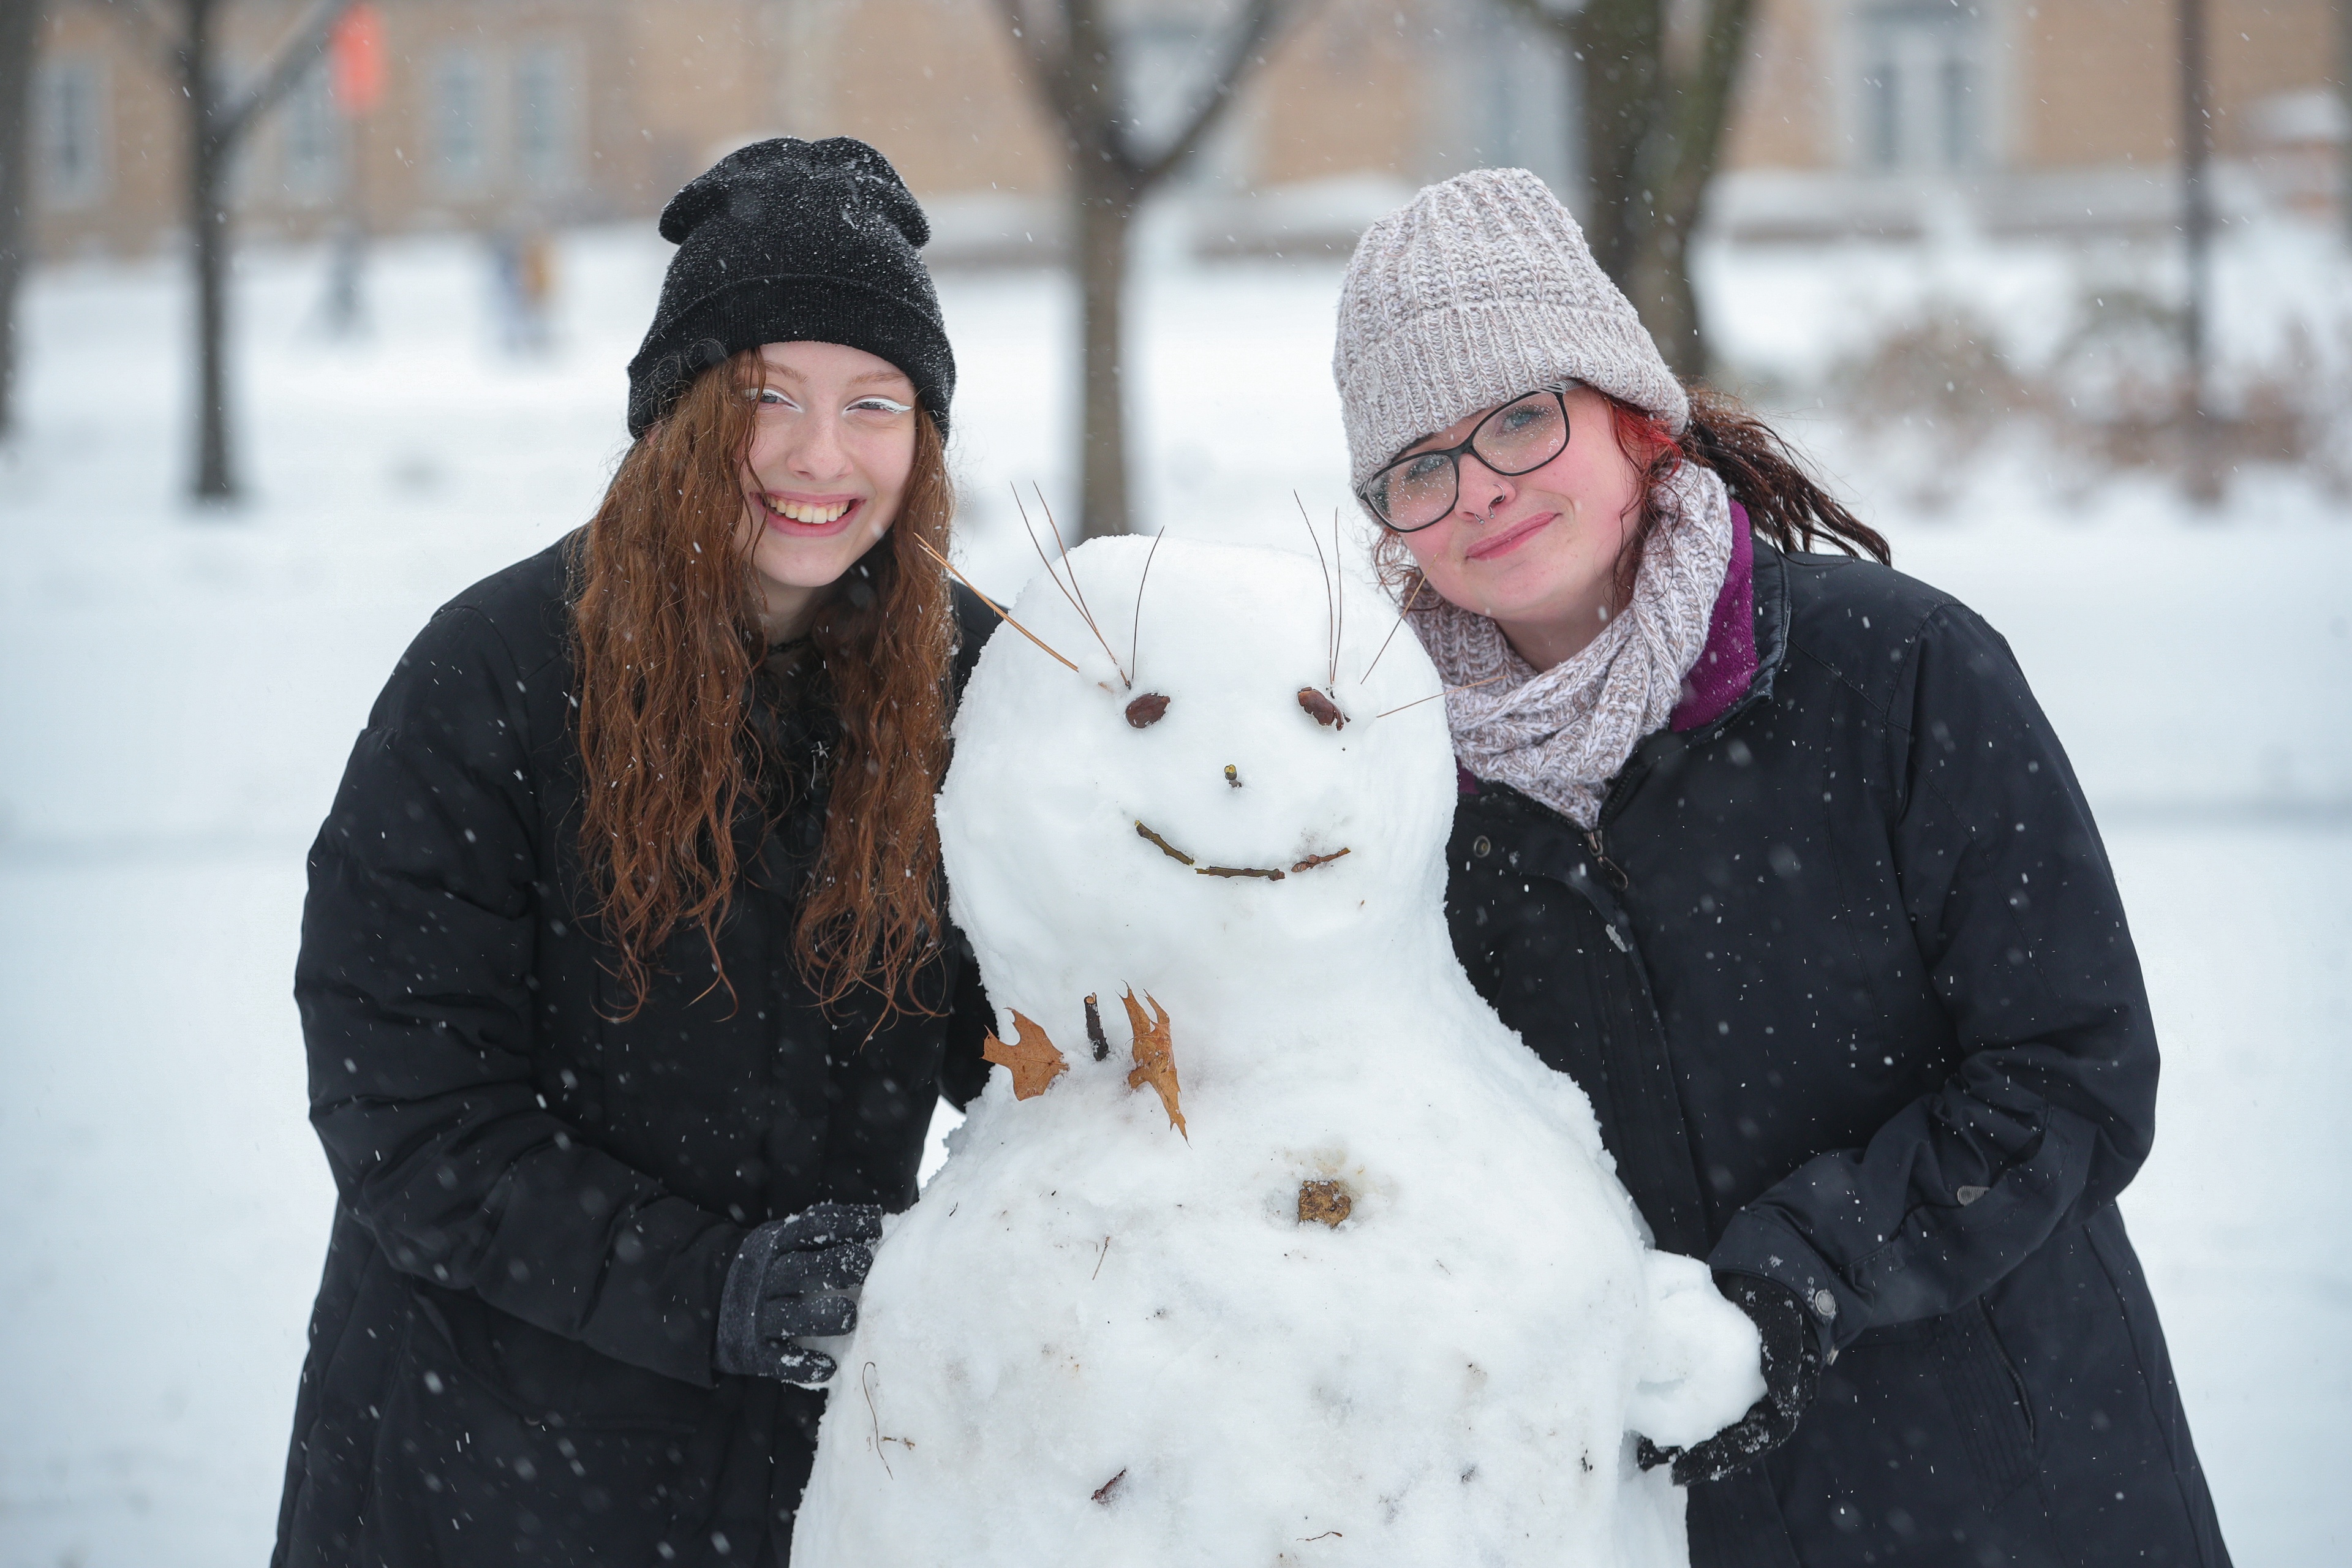 Students make a snowman